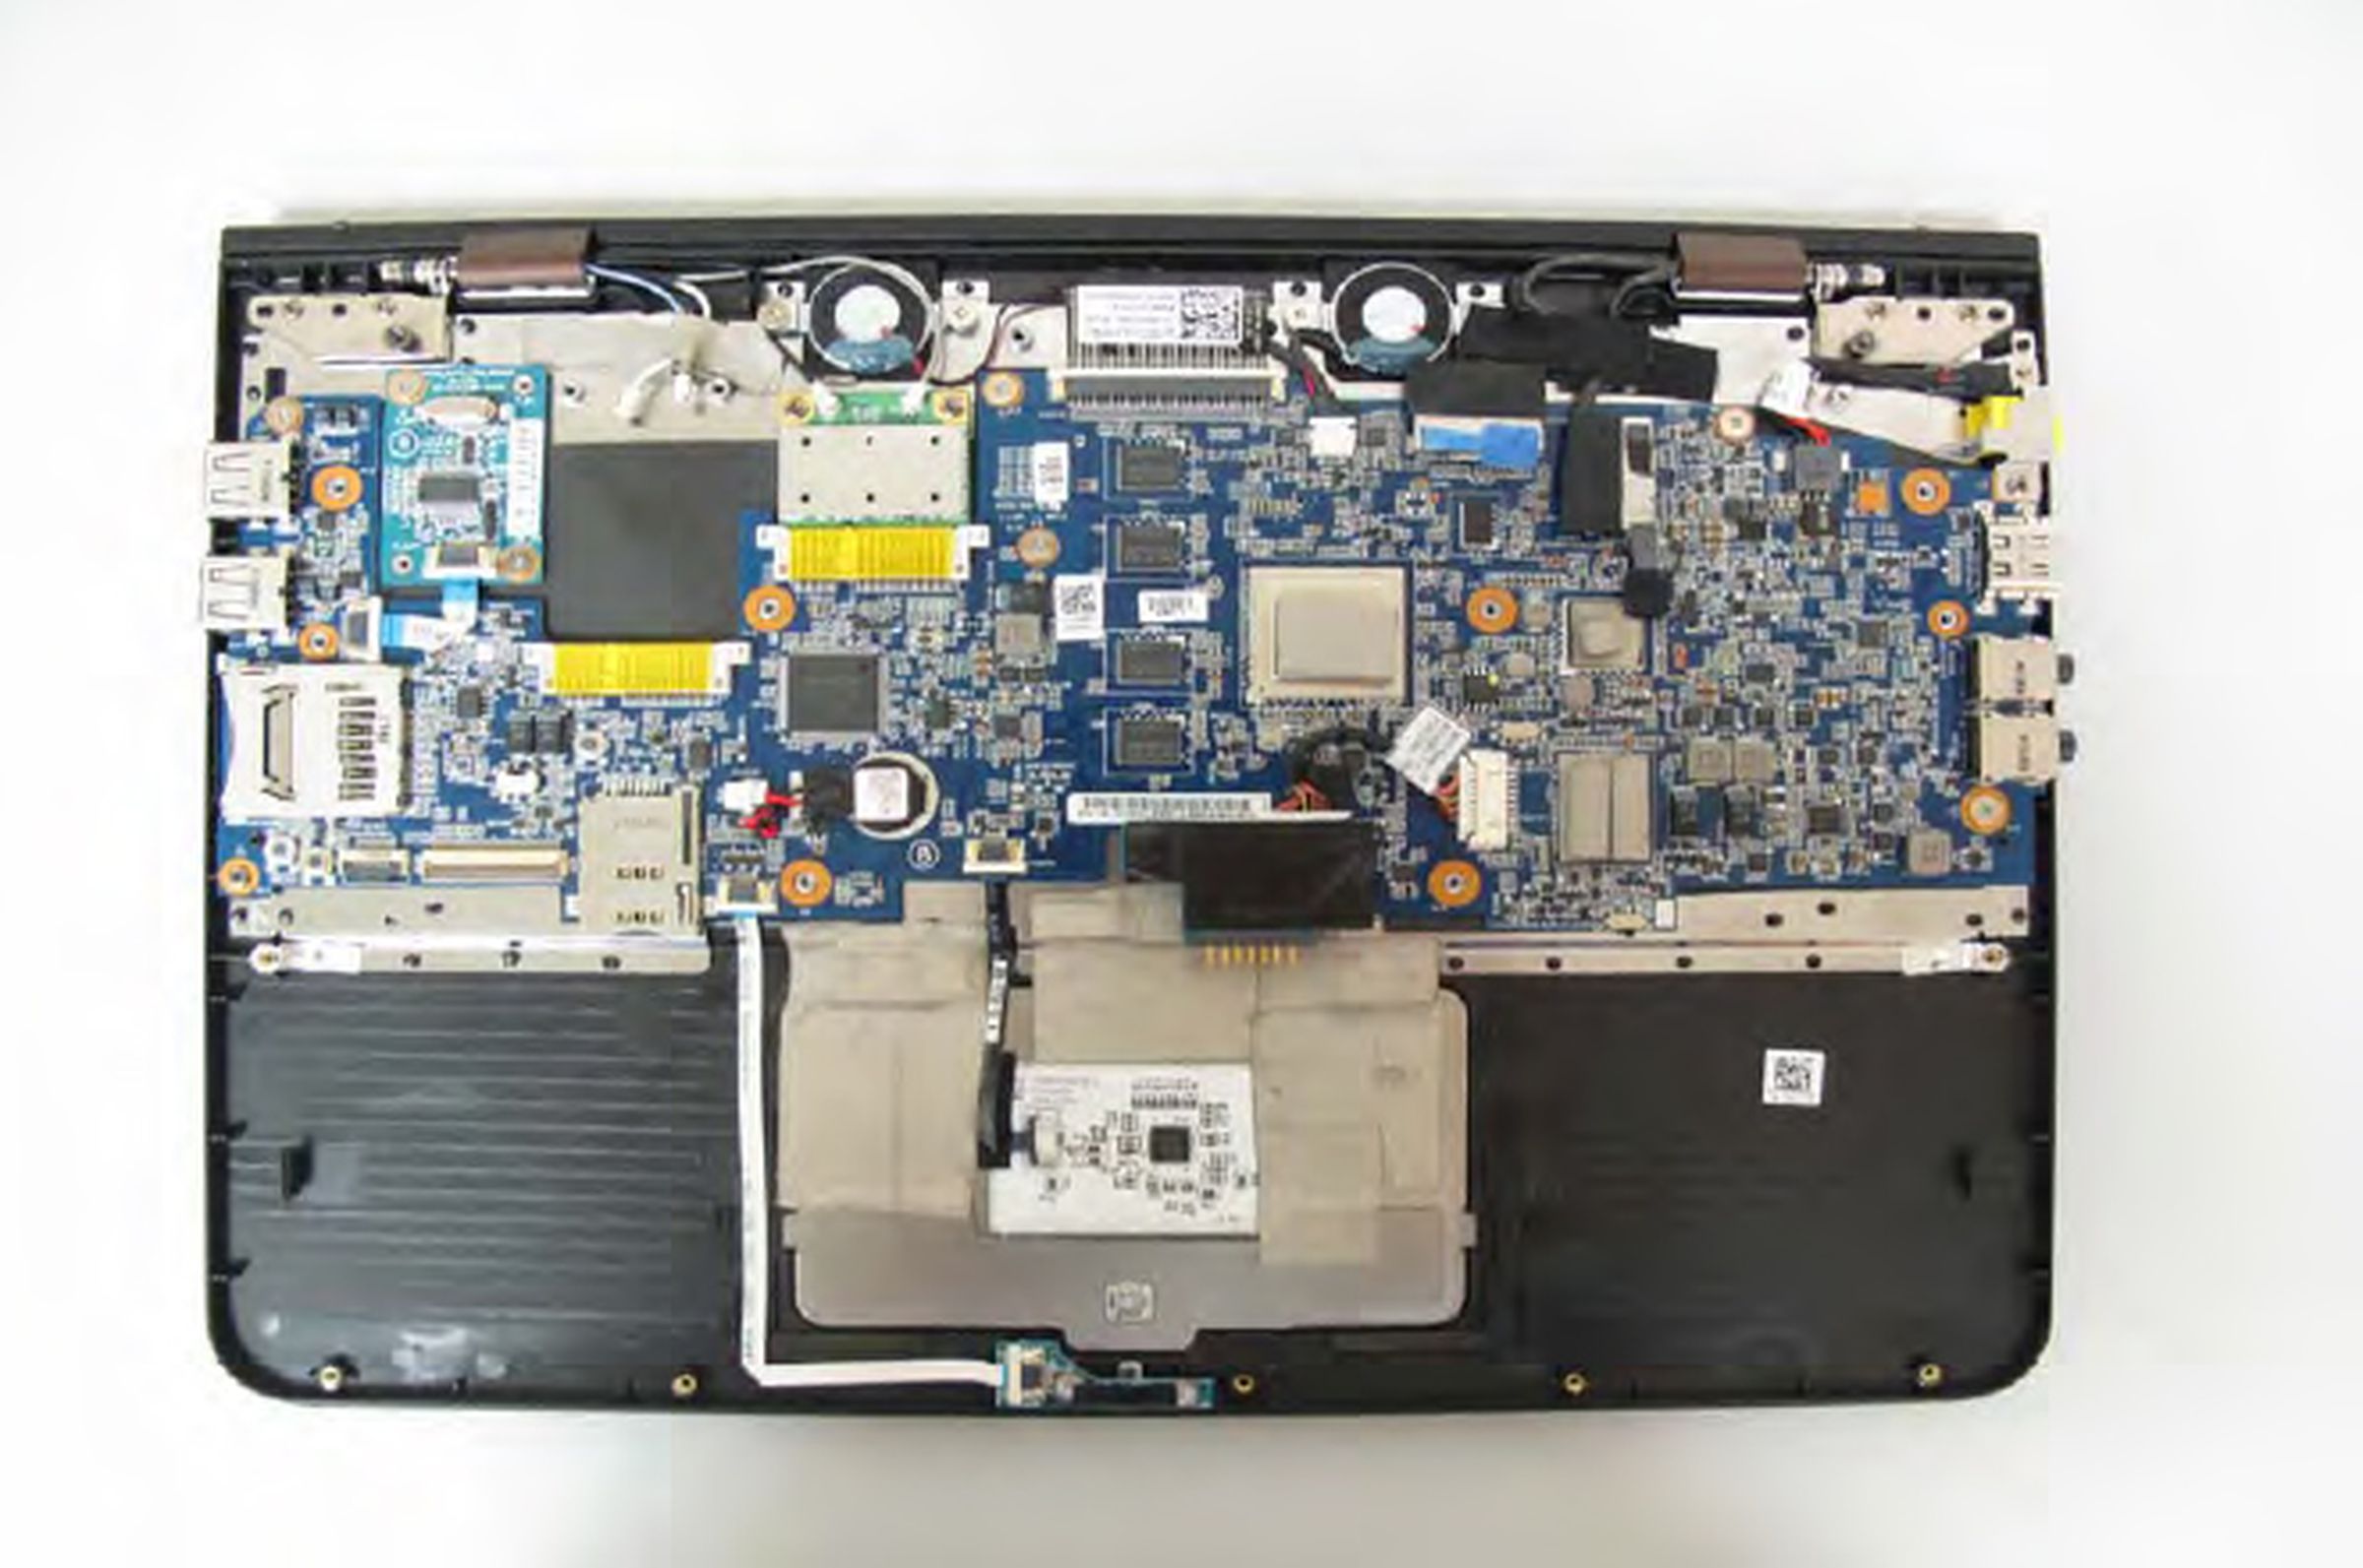 Sony VAIO Chromebook at the FCC